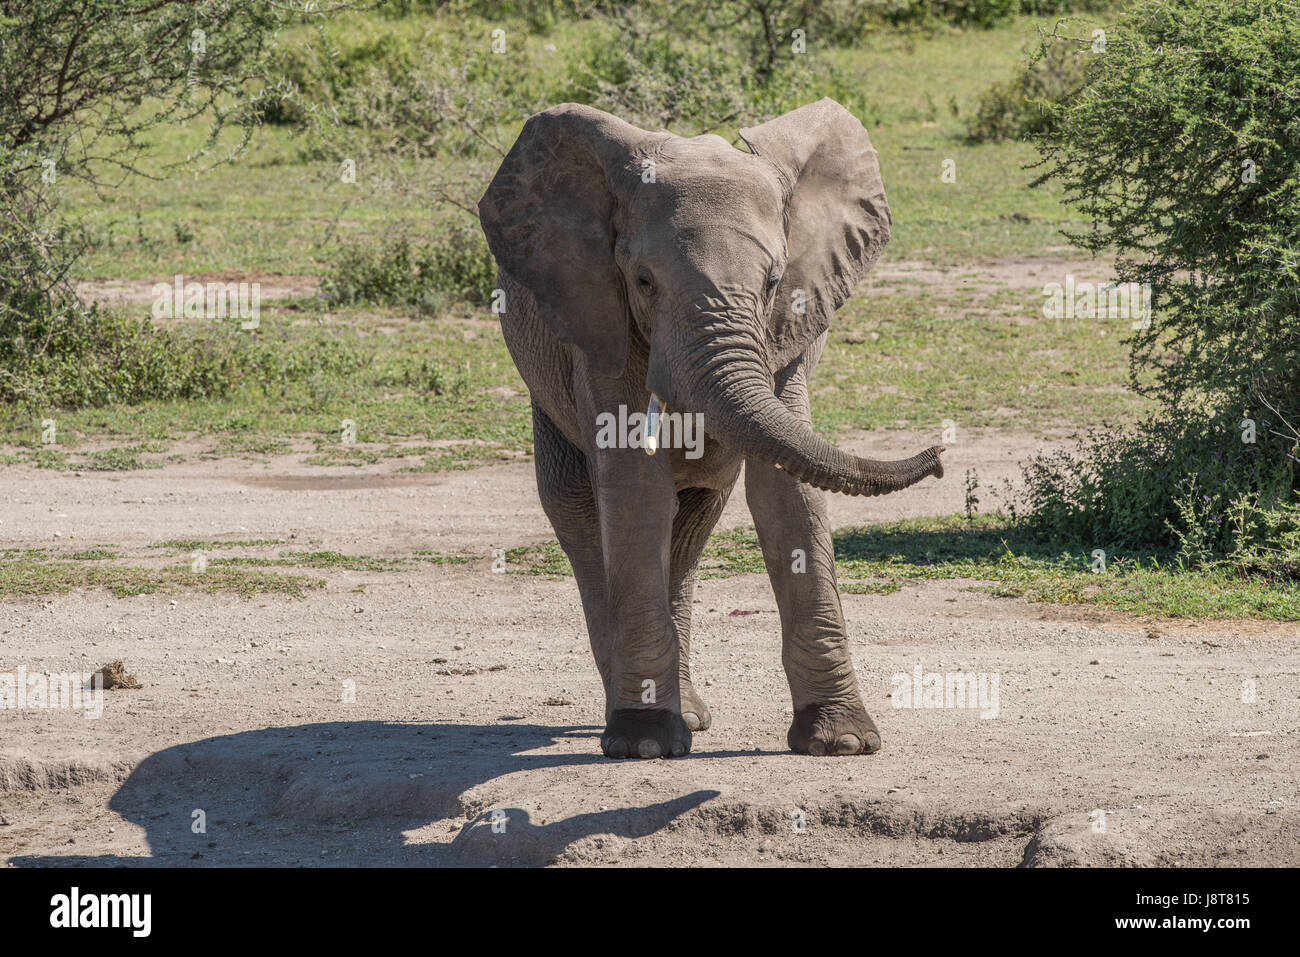 Elephant trunk display, Tanzania Stock Photo